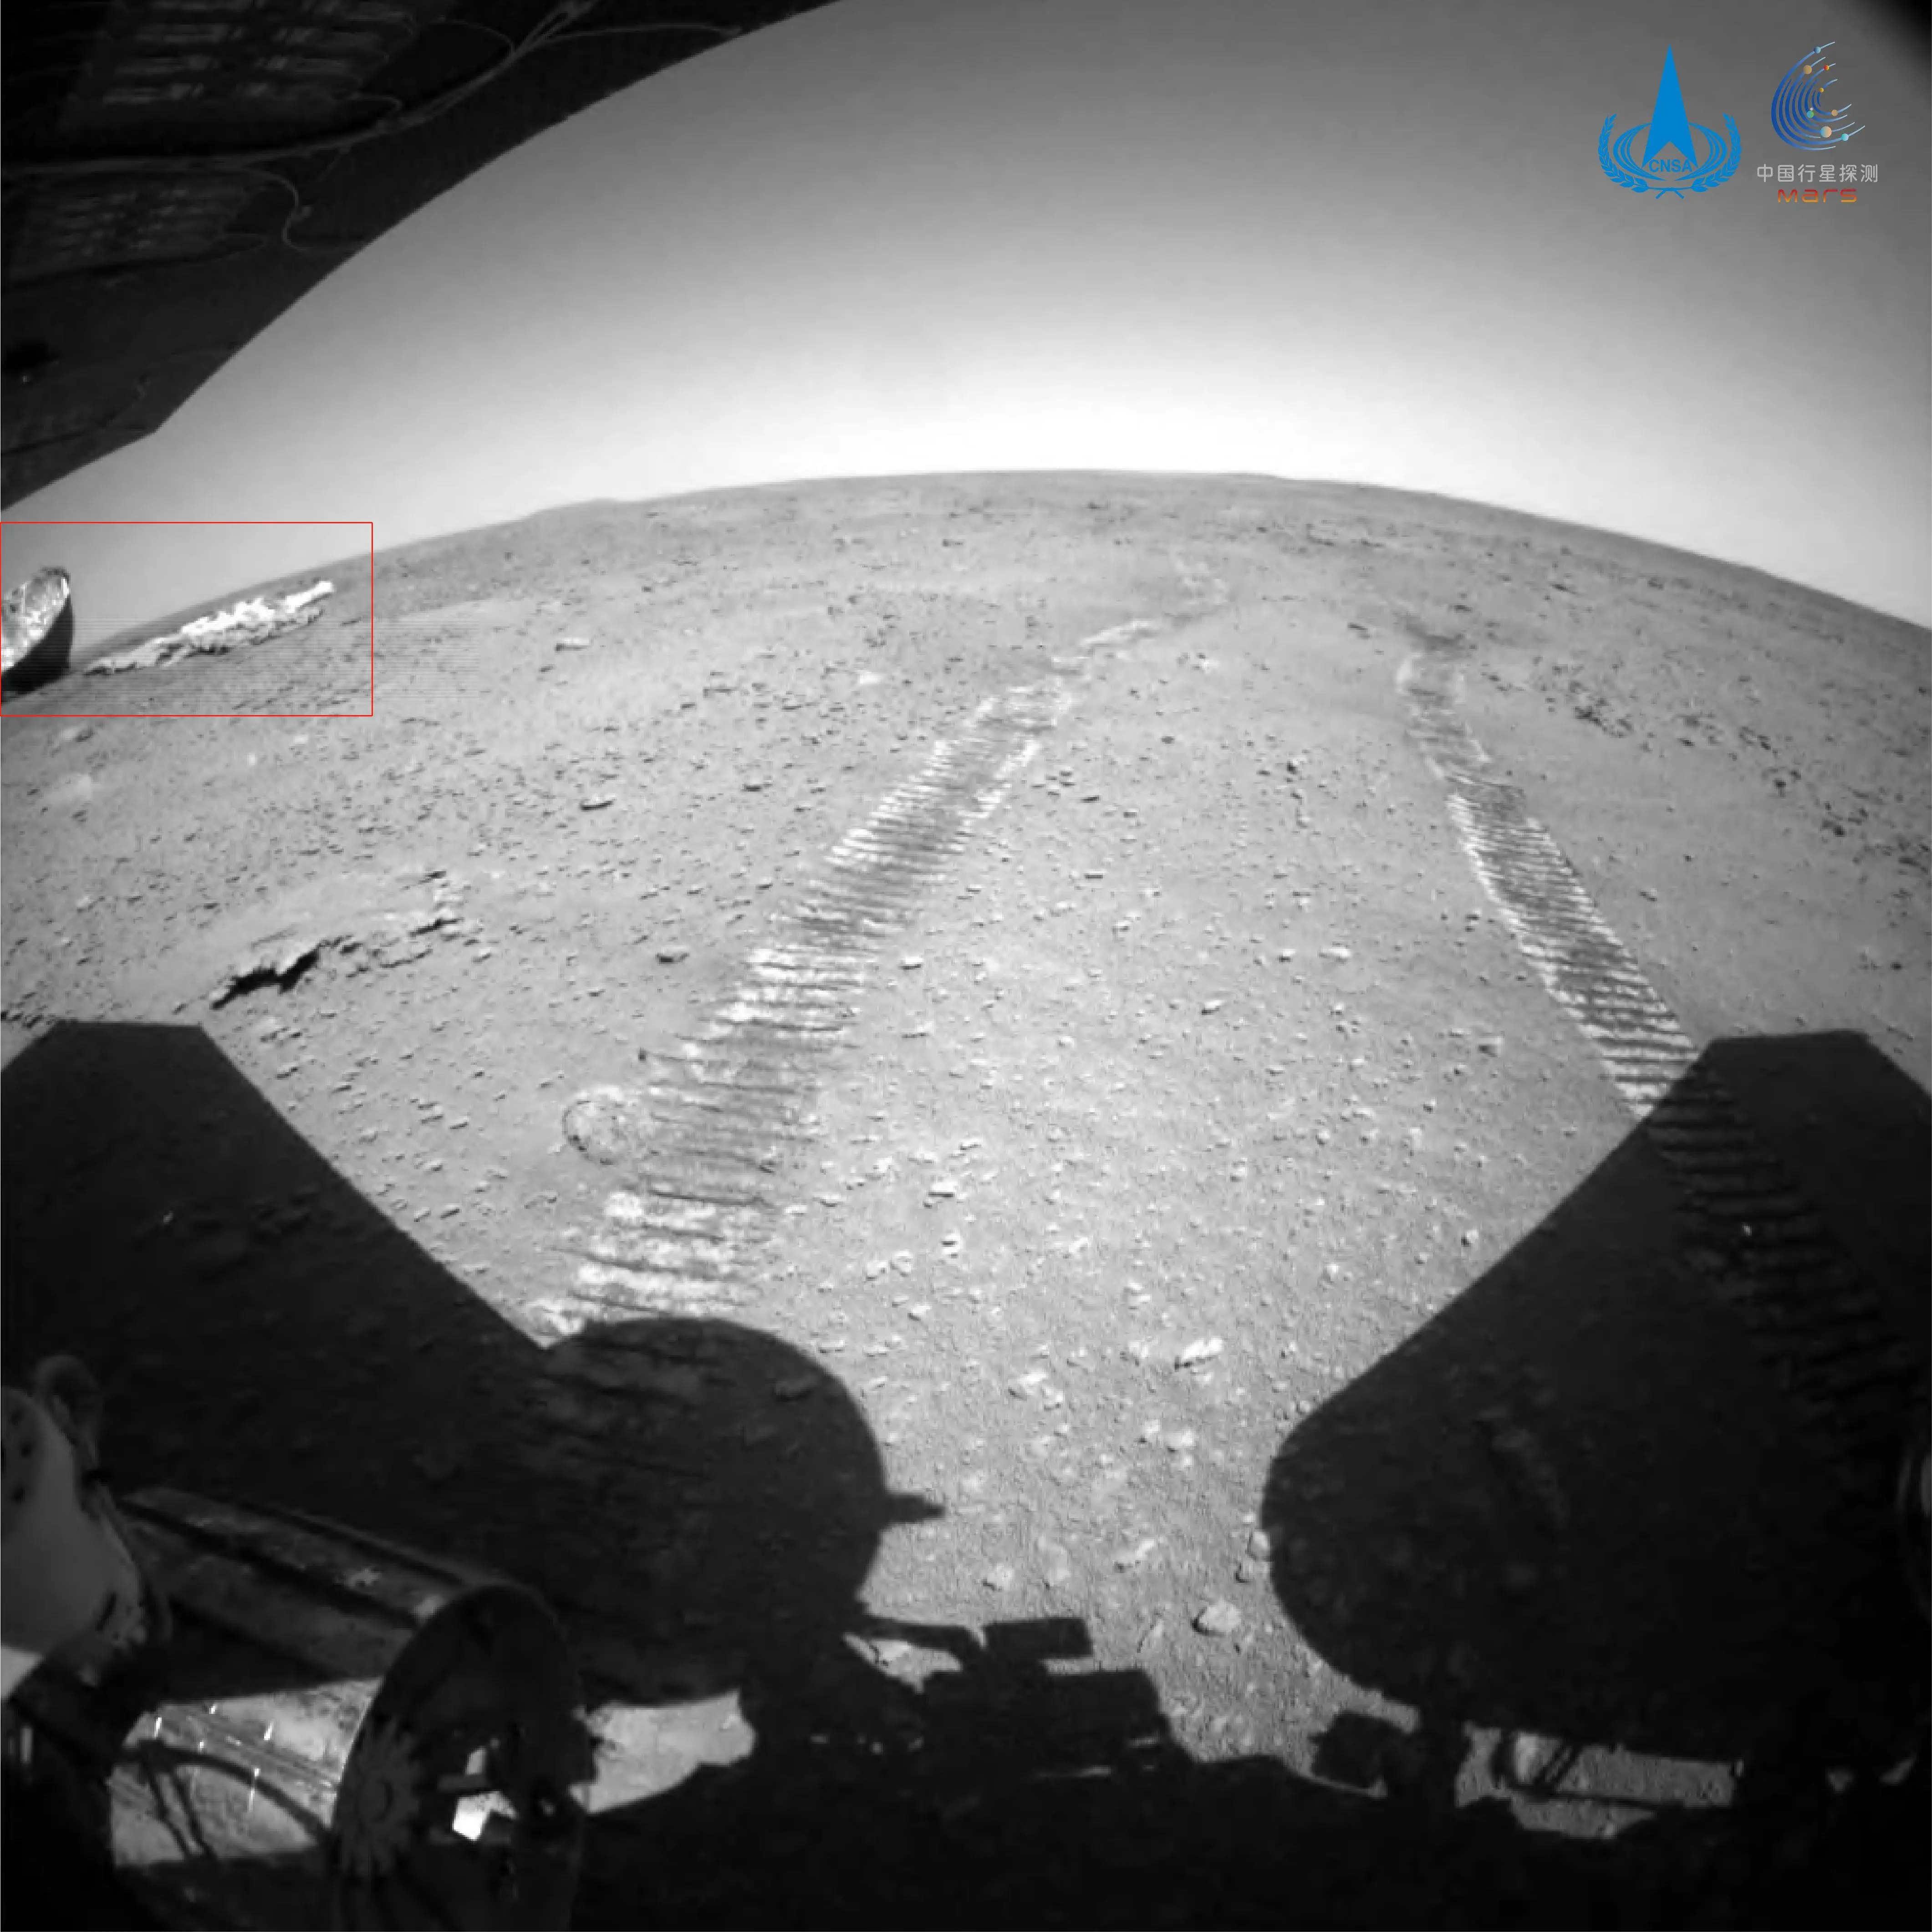 Photo Gallery of China's Zhu Rong Mars Rover[01]-zhaokaifeng.com